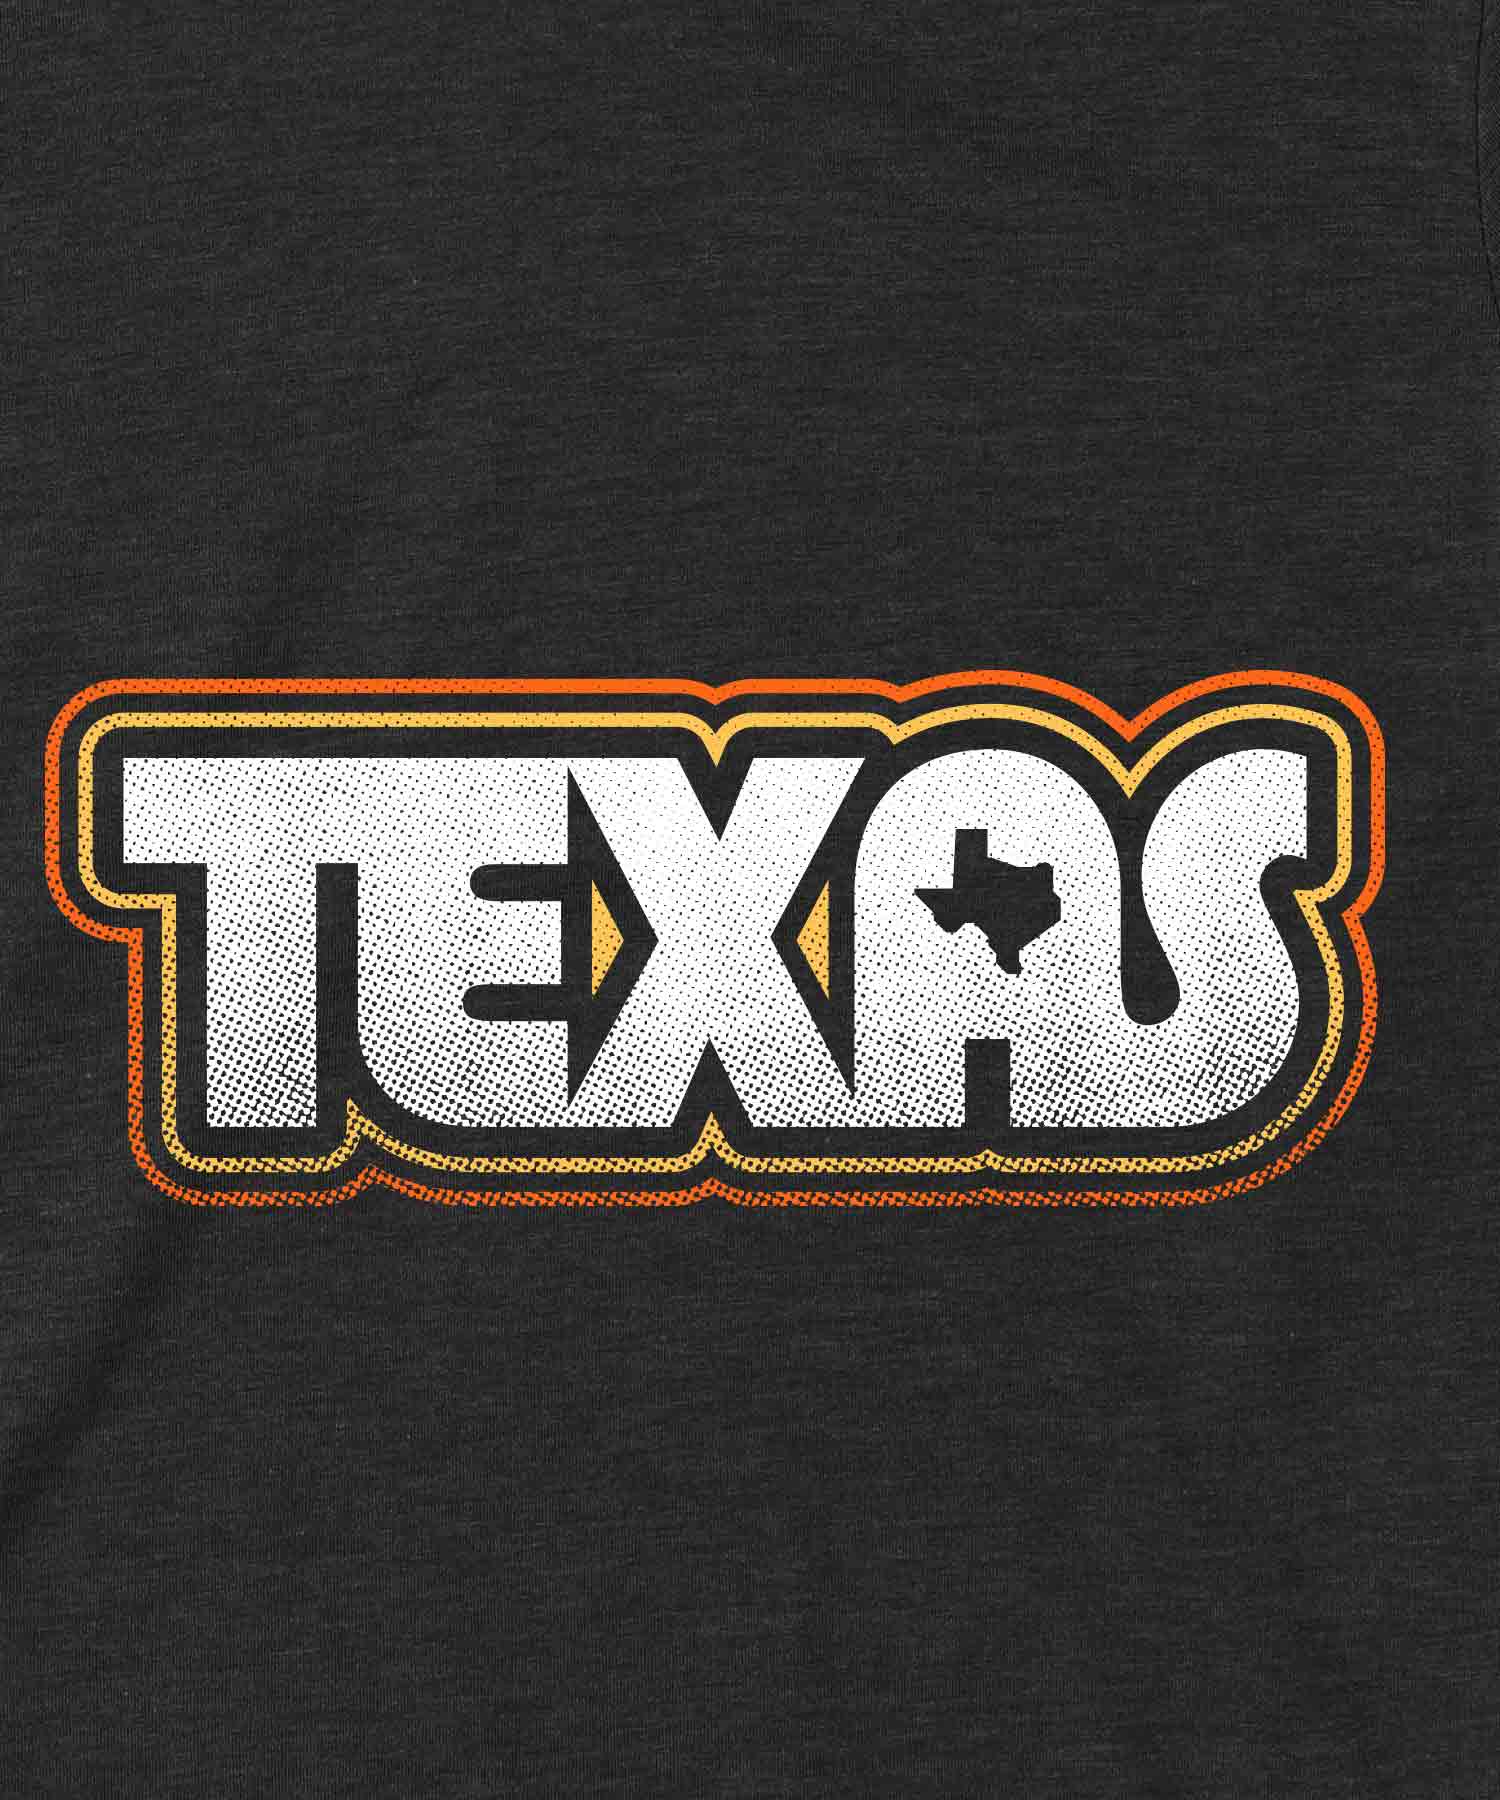 Retro Texas Design